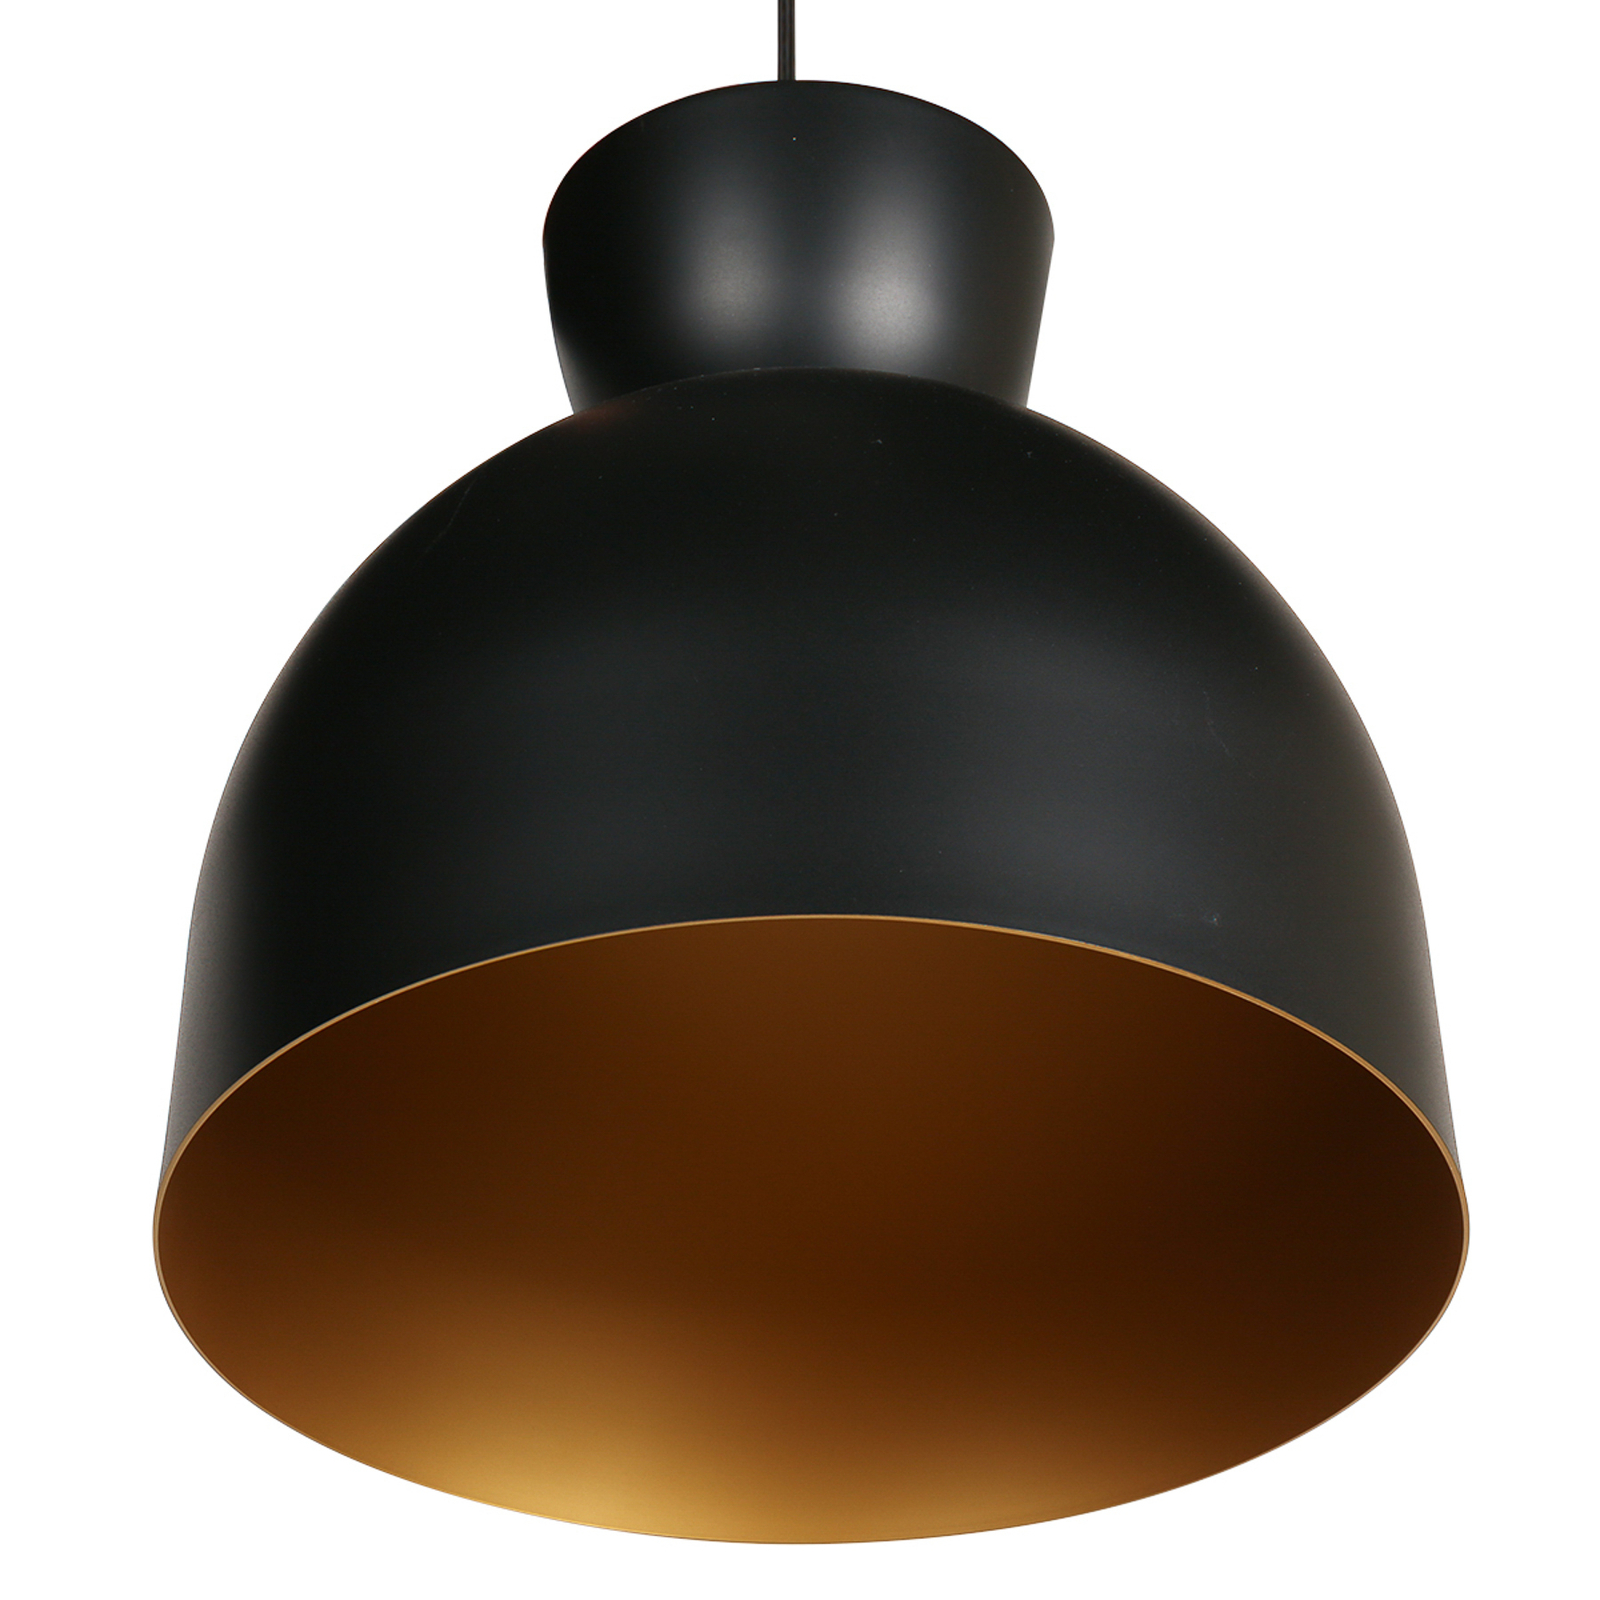 Skandina 3683ZW závěsné světlo, černá barva, kov, Ø 36,5 cm